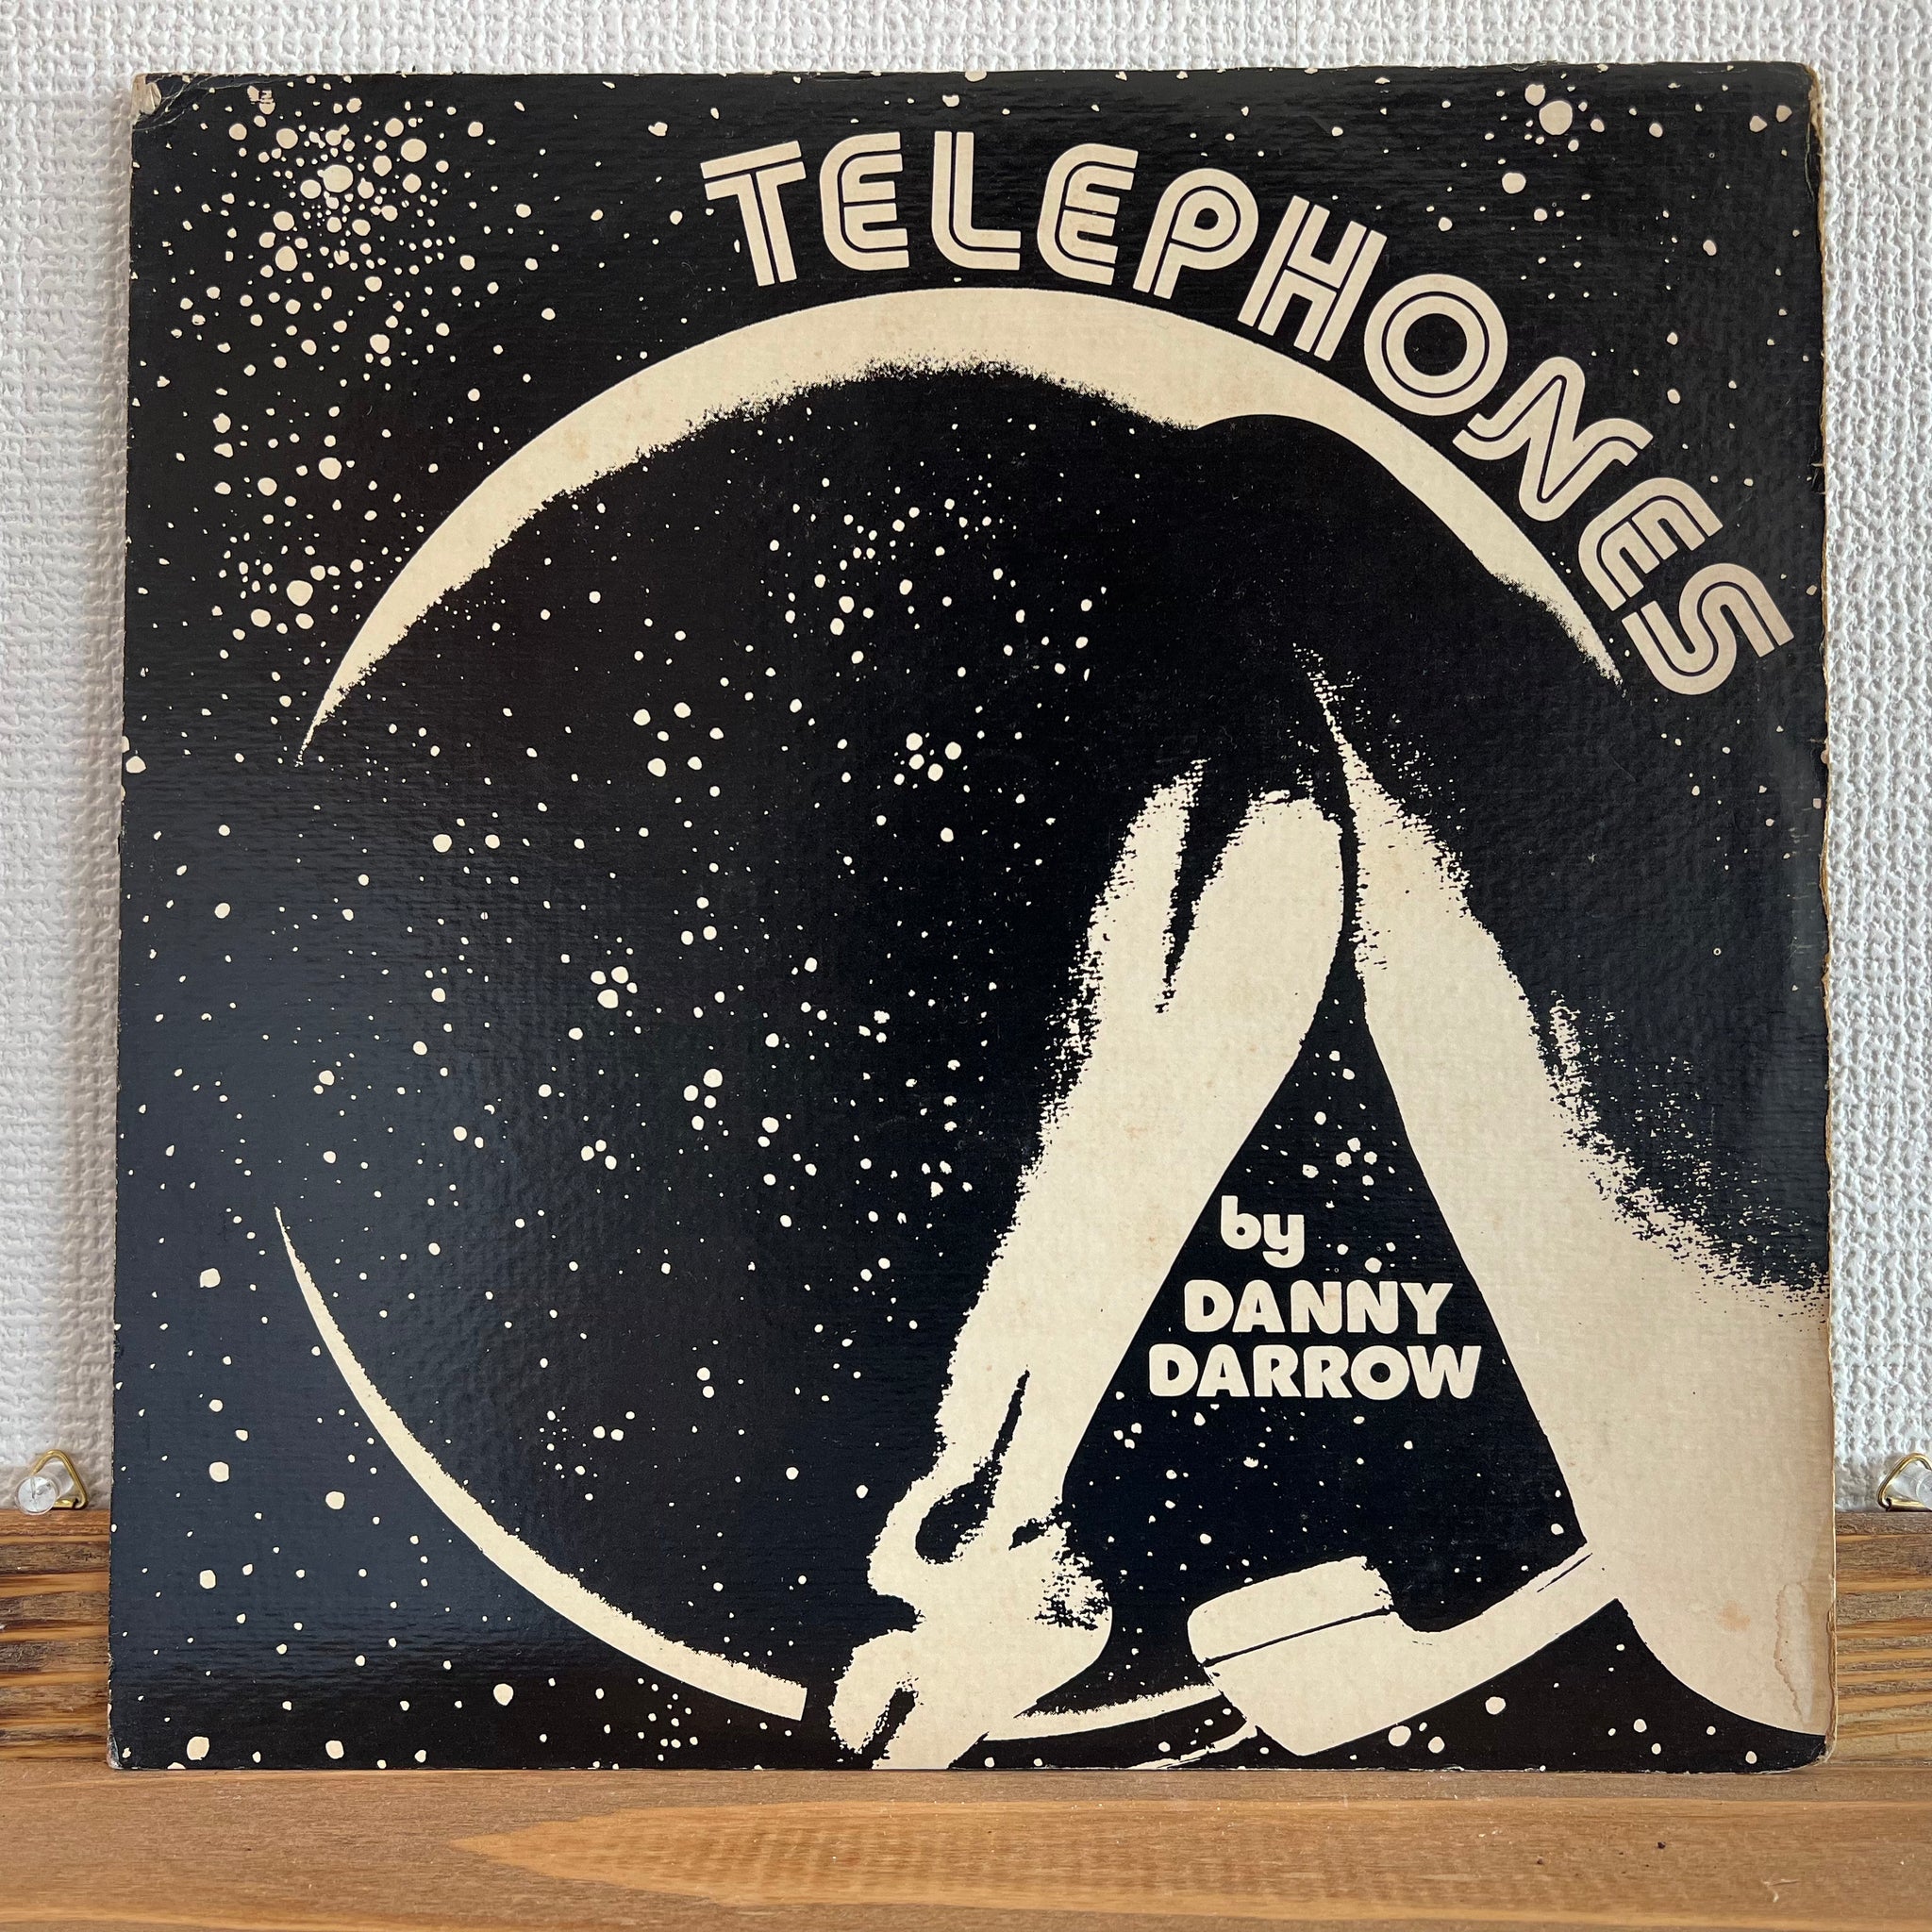 Danny Darrow - Telephones